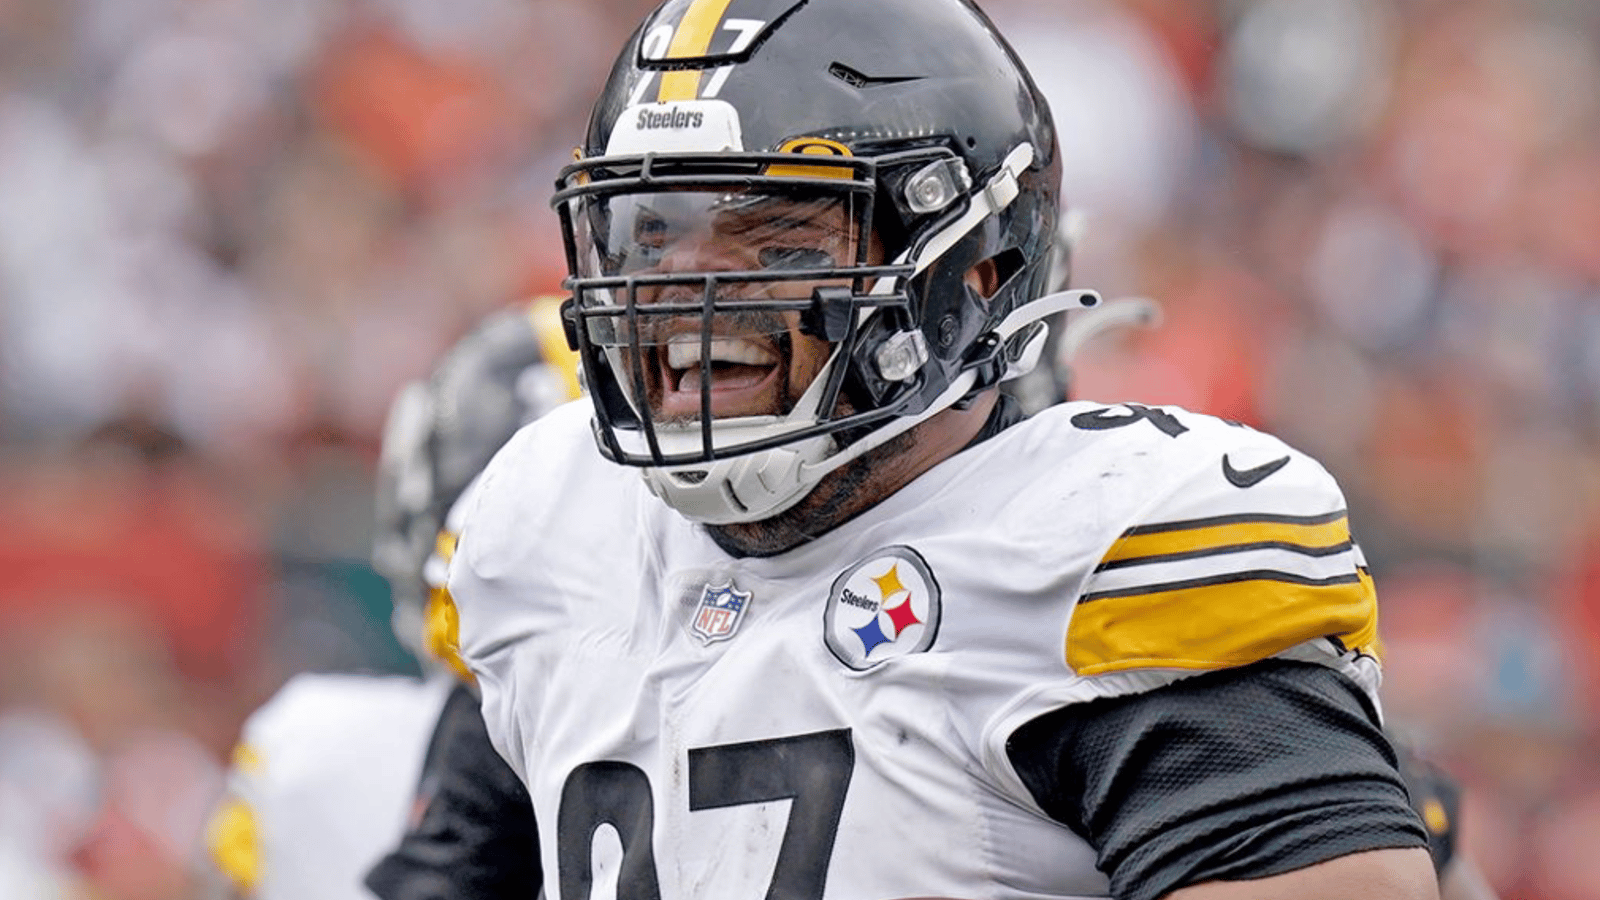 Cameron Heyward demands reinstatement of suspended ex-Steelers teammate 